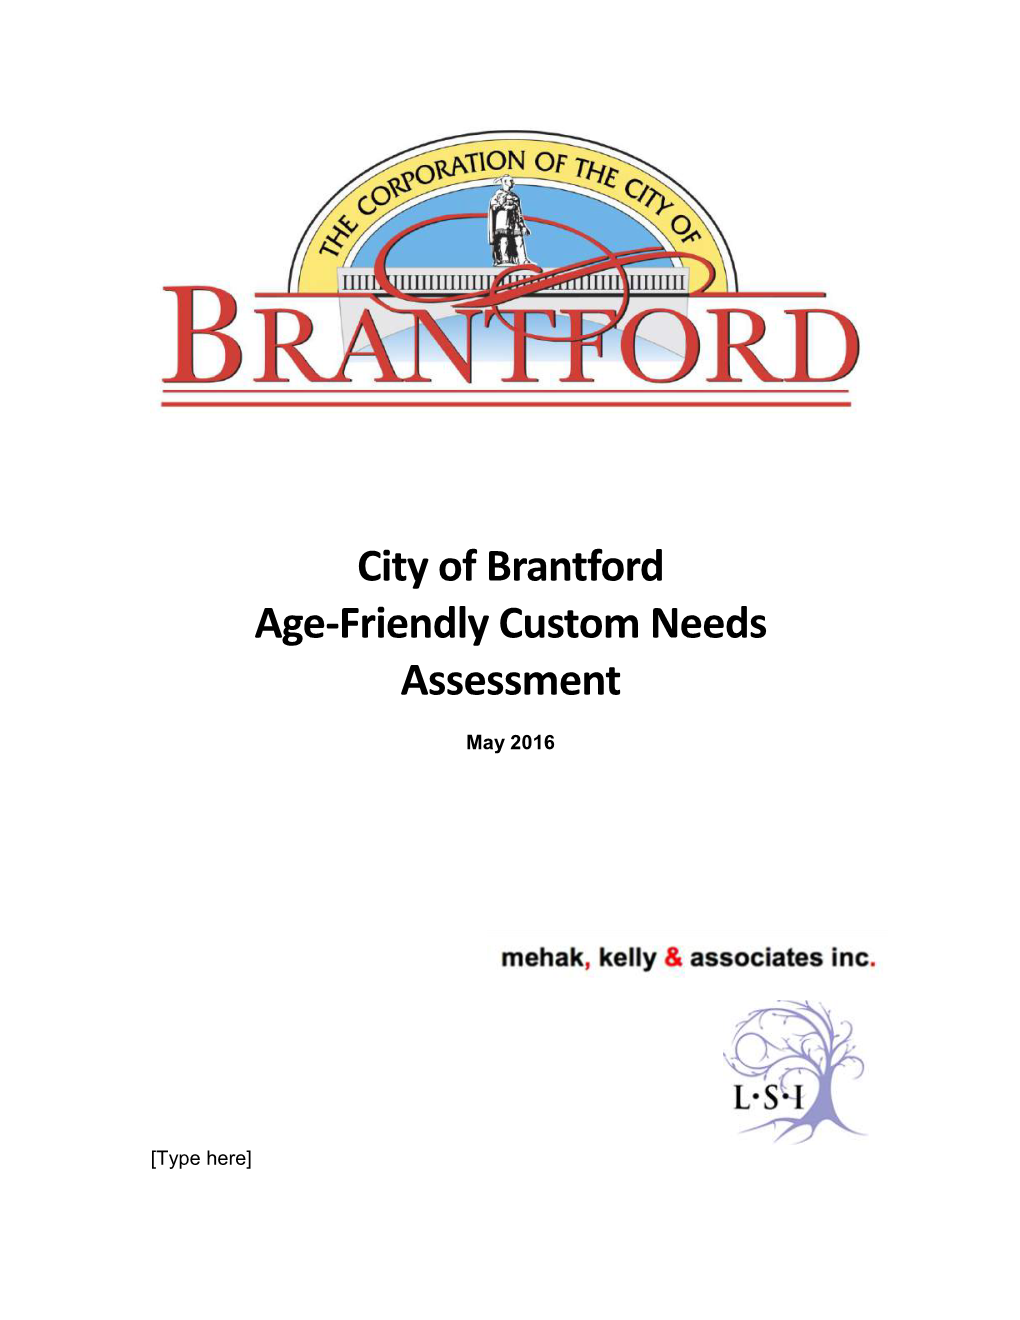 City of Brantford Age-Friendly Custom Needs Assessment